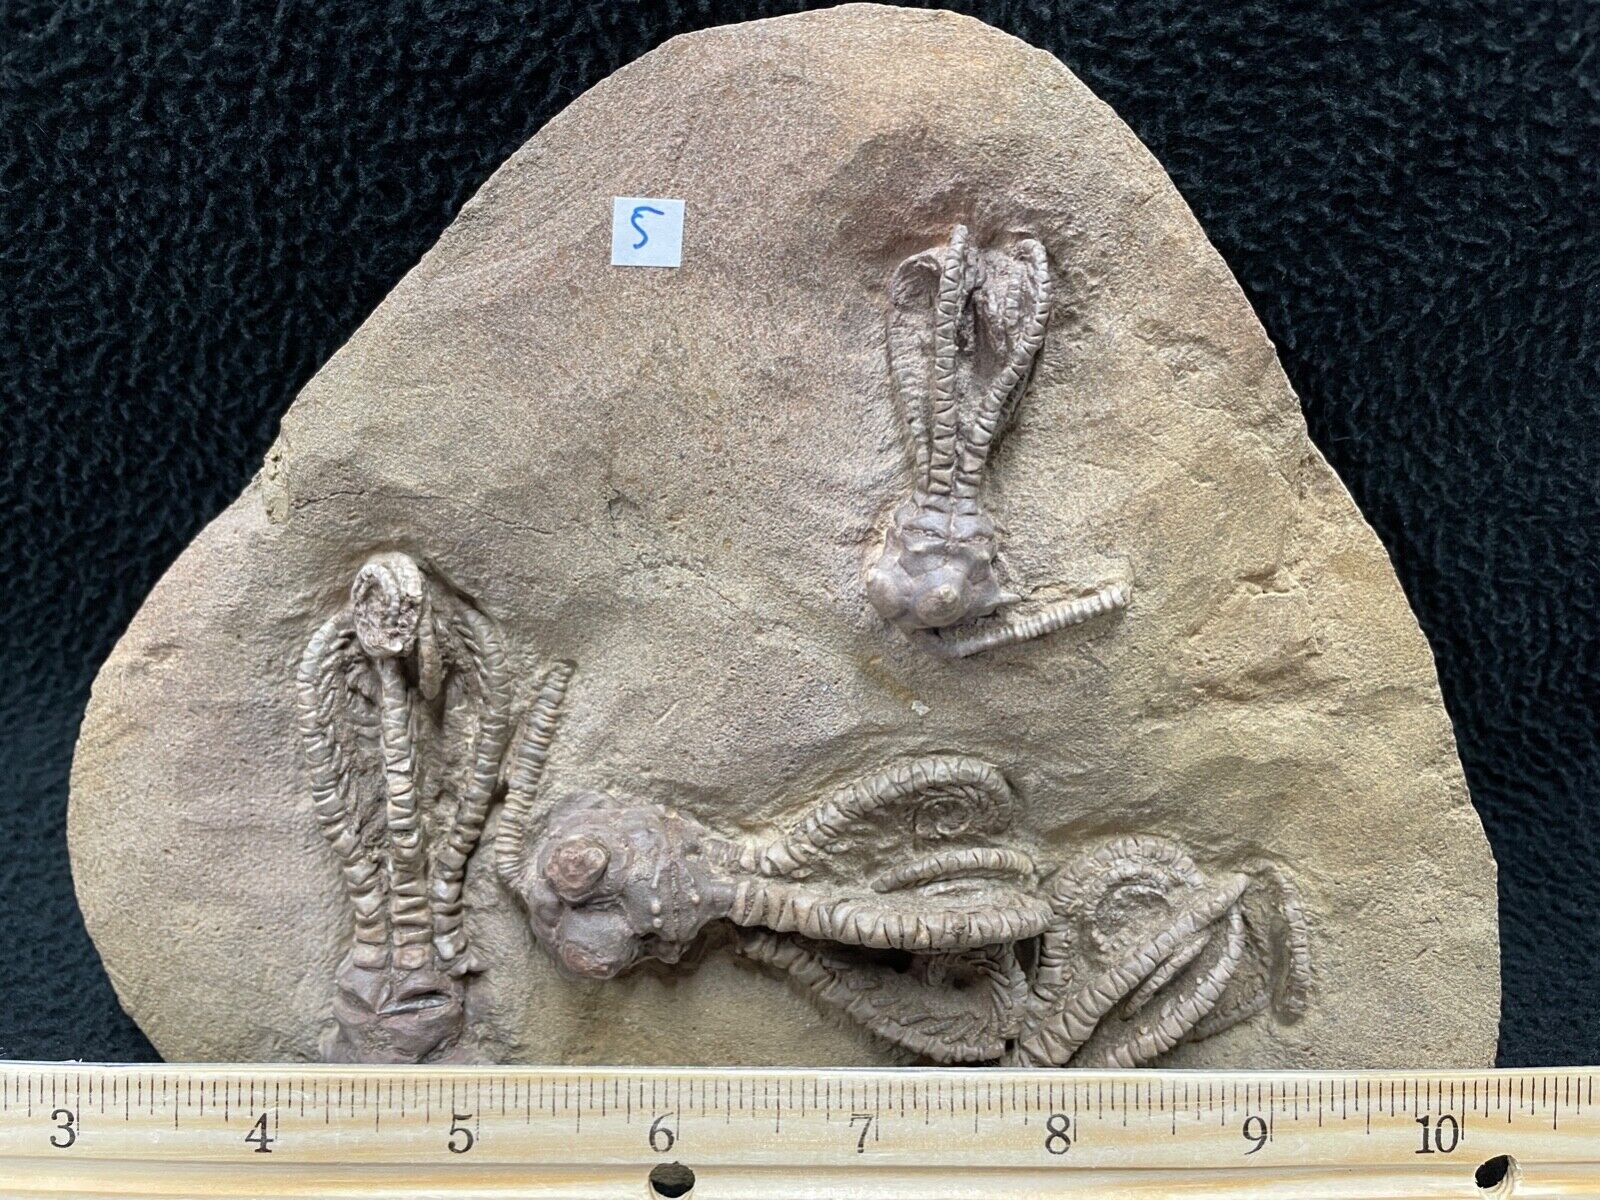 Super Fossil Crinoid Plate, Jimbacrinus bostocki, Australia